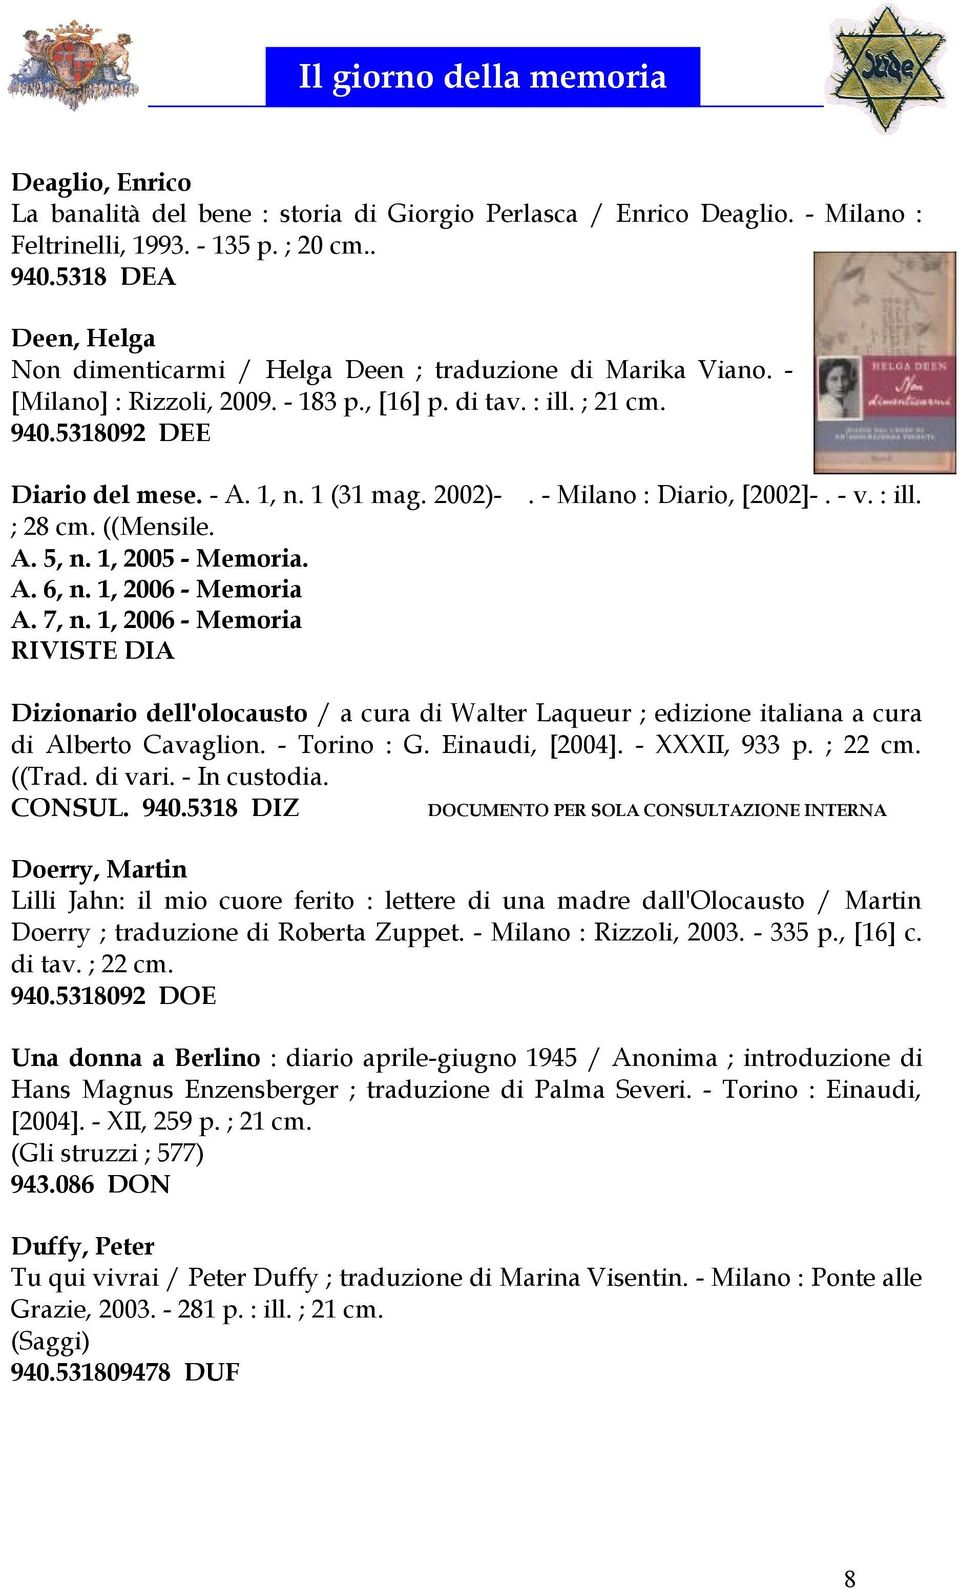 1 (31 mag. 2002)- ; 28 cm. ((Mensile. A. 5, n. 1, 2005 - Memoria. A. 6, n. 1, 2006 - Memoria A. 7, n. 1, 2006 - Memoria RIVISTE DIA. - Milano : Diario, [2002]-. - v. : ill.